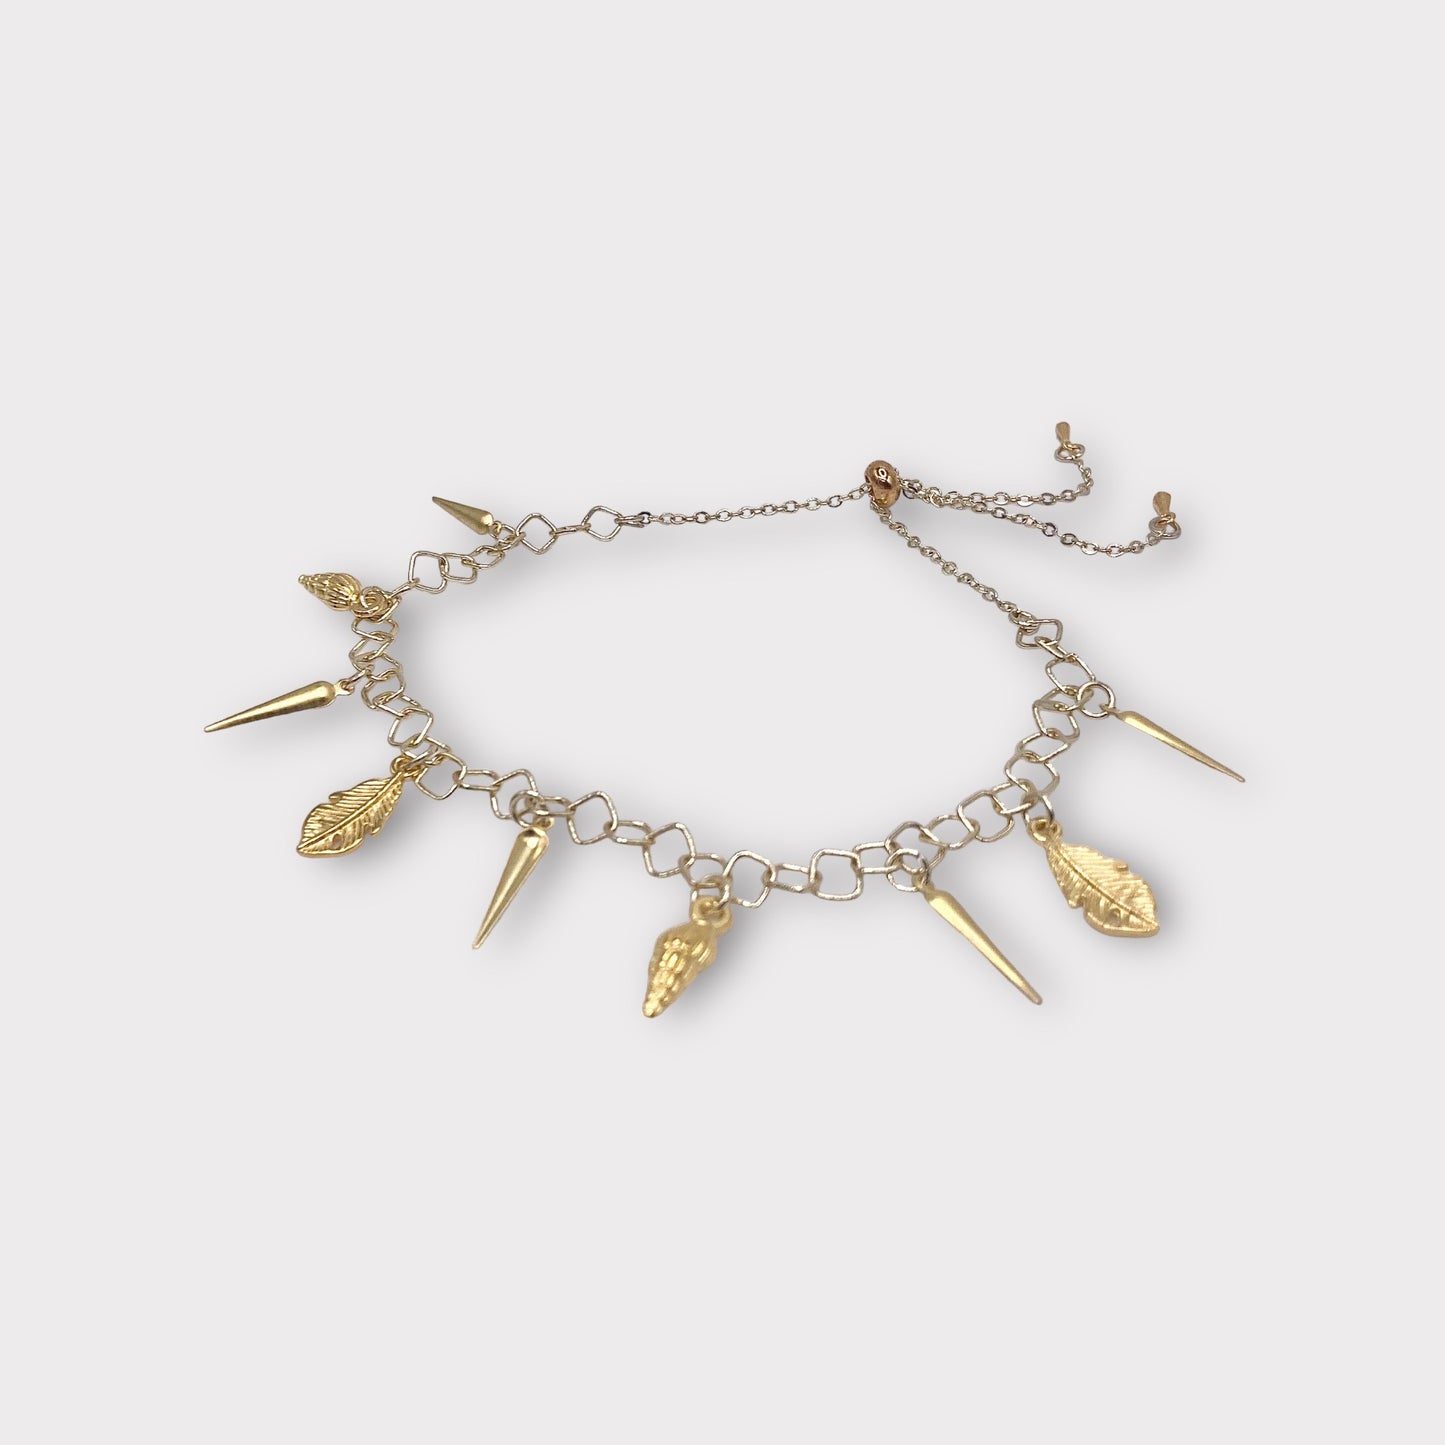 Pirate's Gold Charm Bracelet